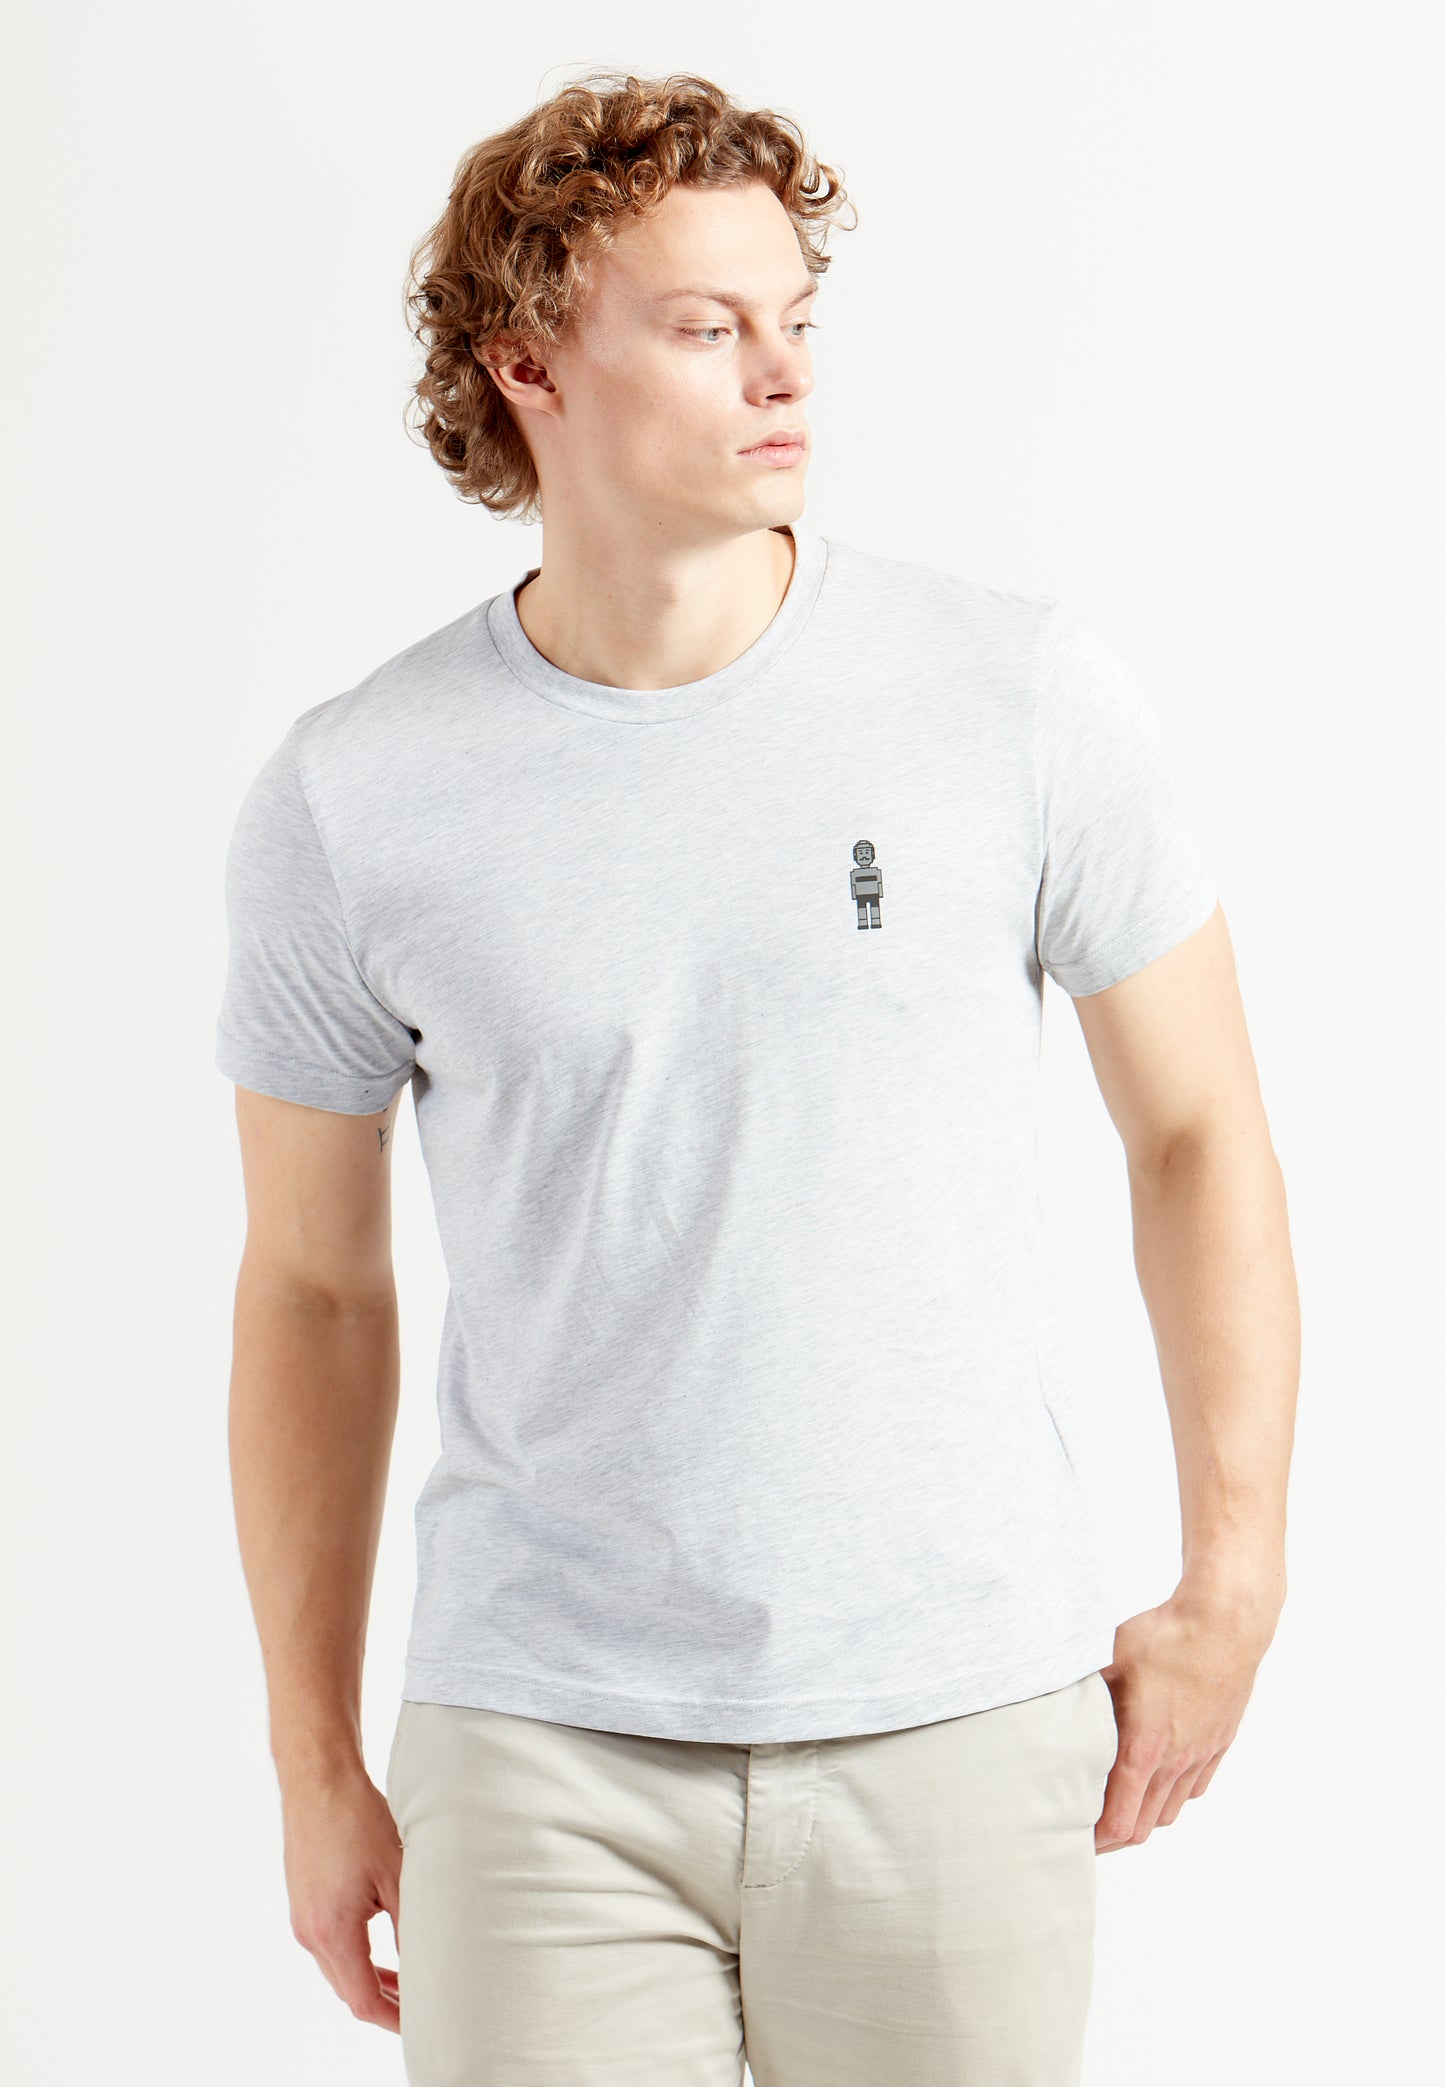 oTTo refleks mascot - T-Shirt melange grey